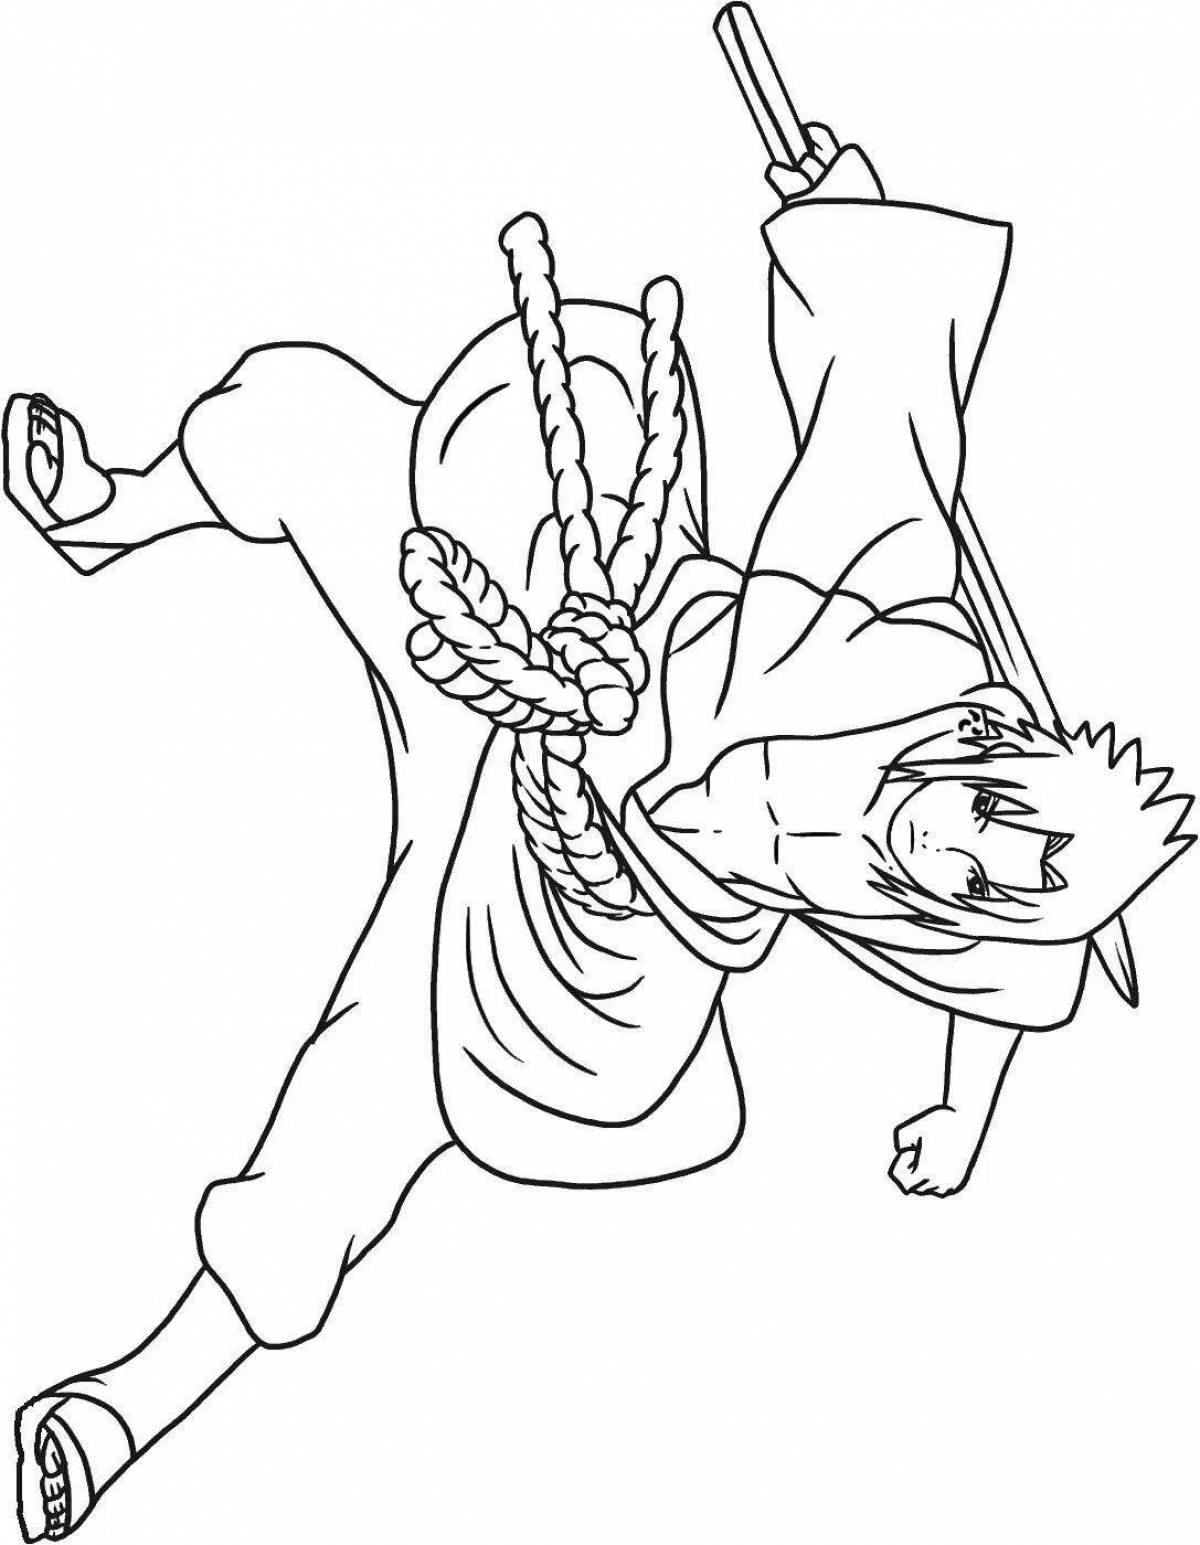 Playful jutsu heroes coloring page